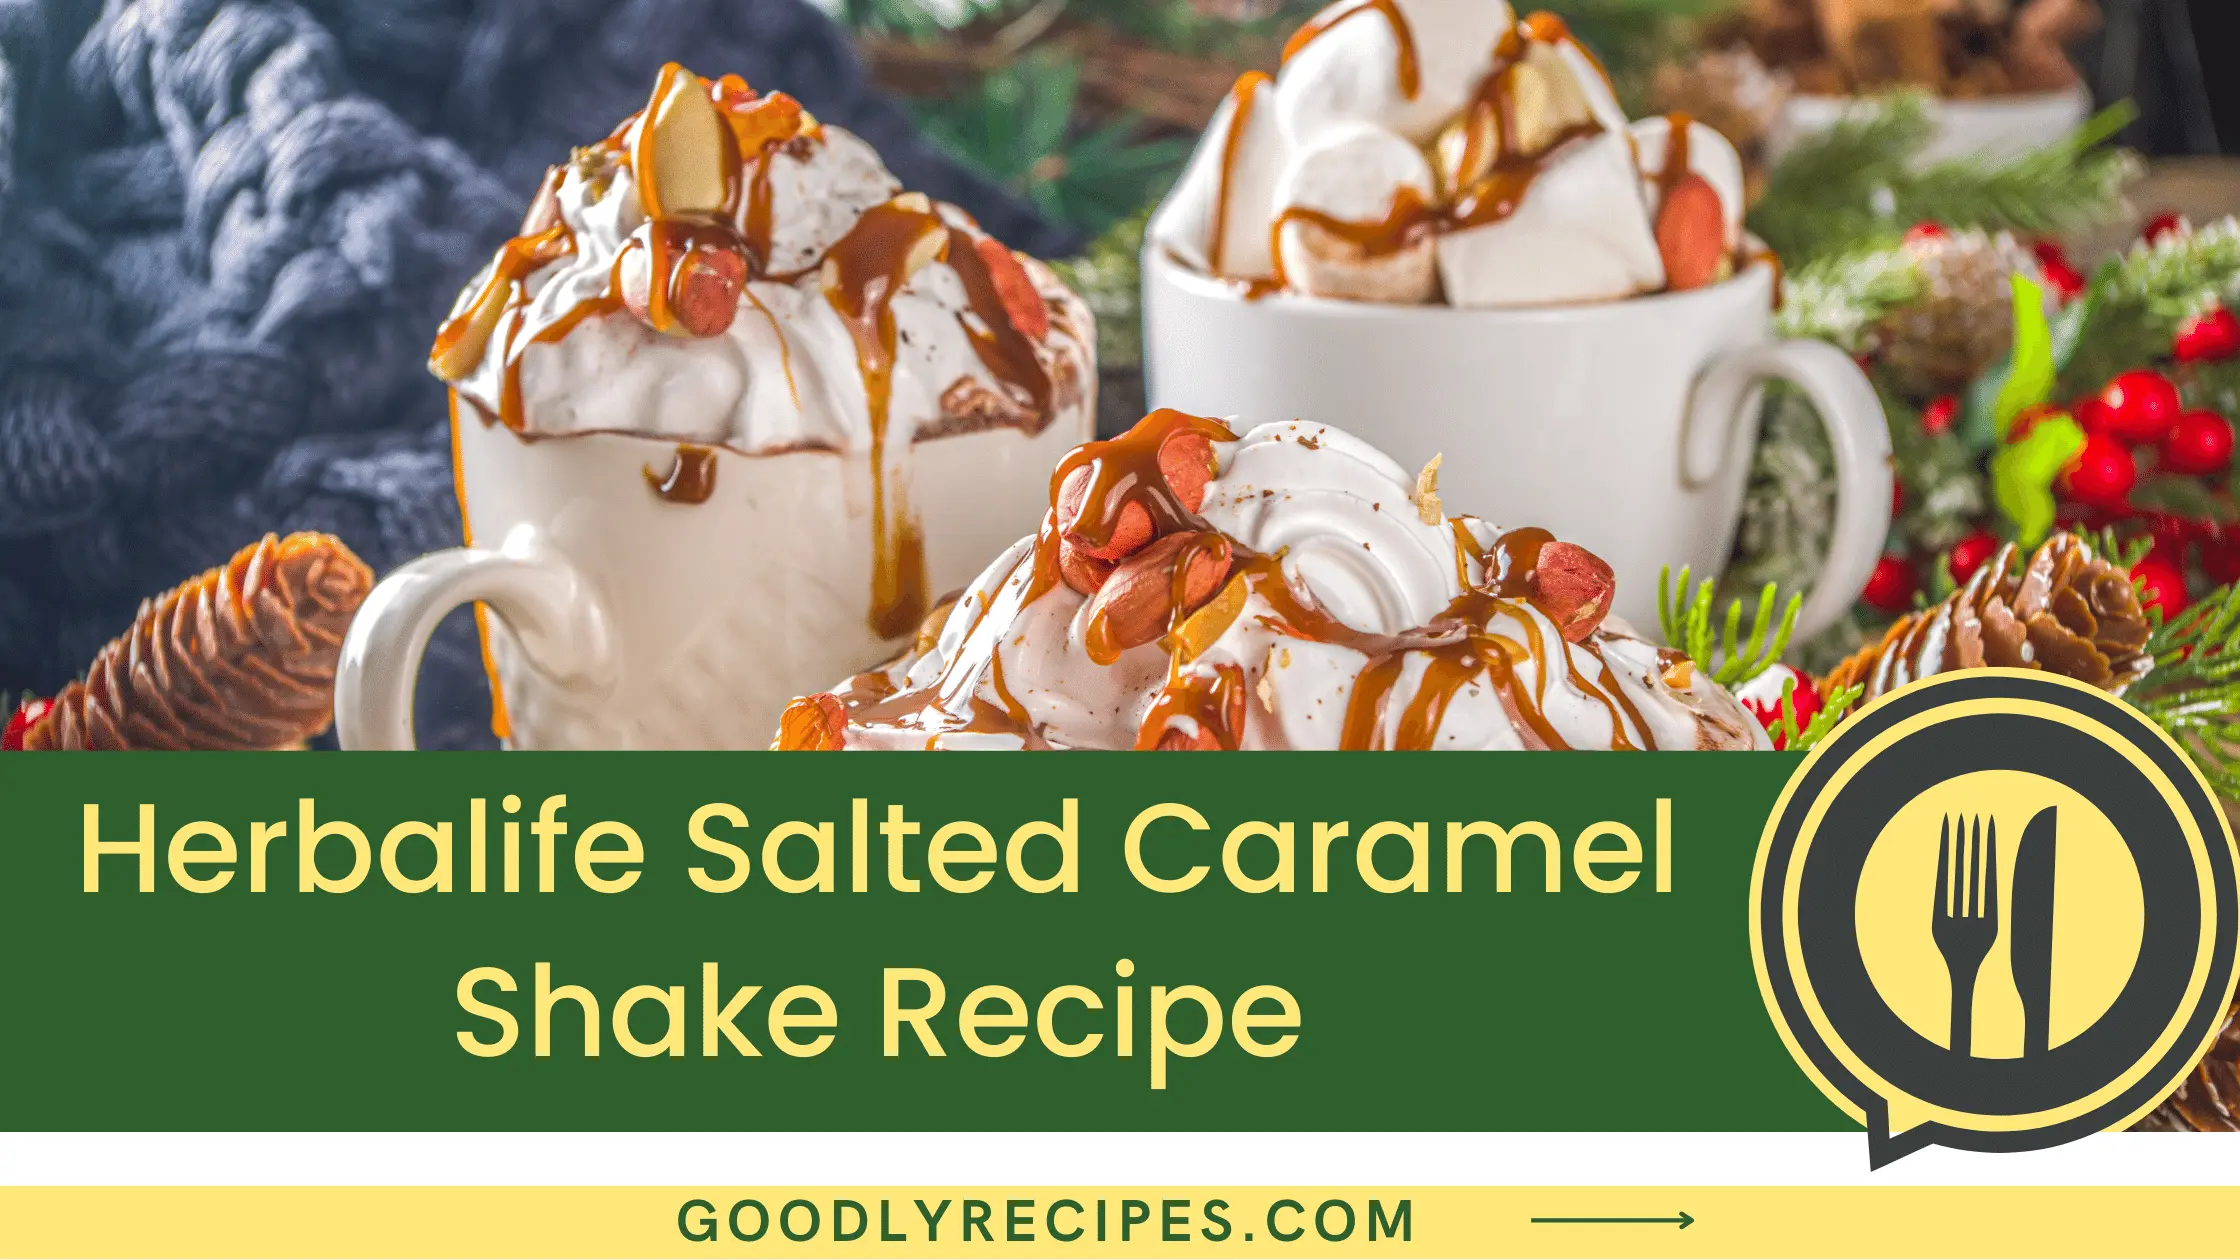 What is Herbalife Salted Caramel Shake?